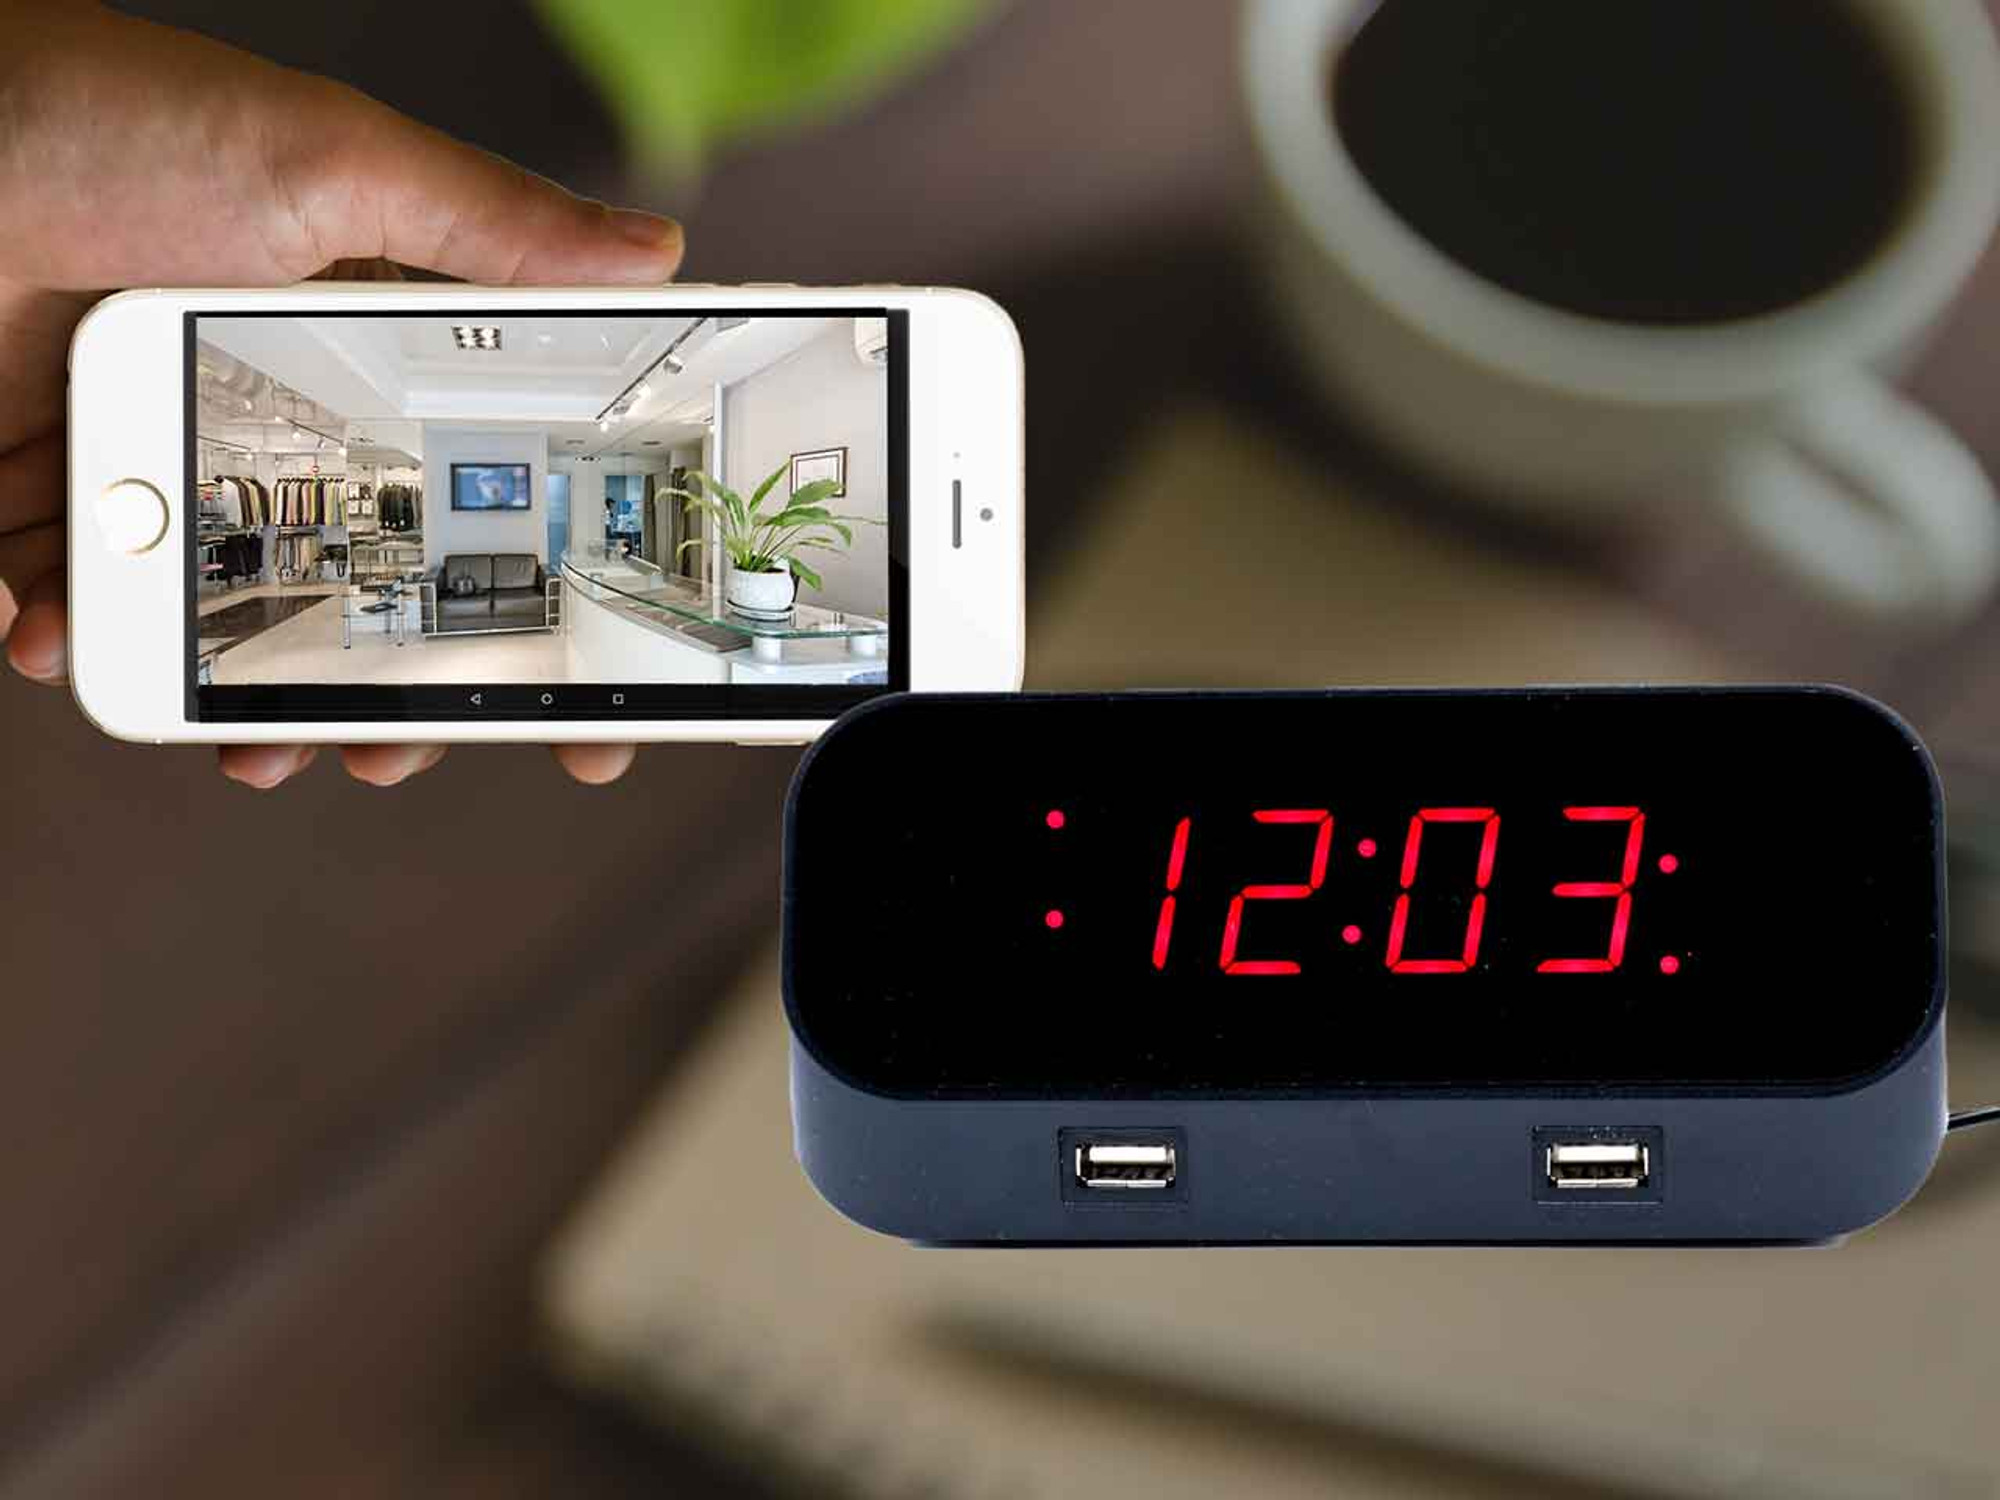 best alarm clock hidden camera with audio reviews